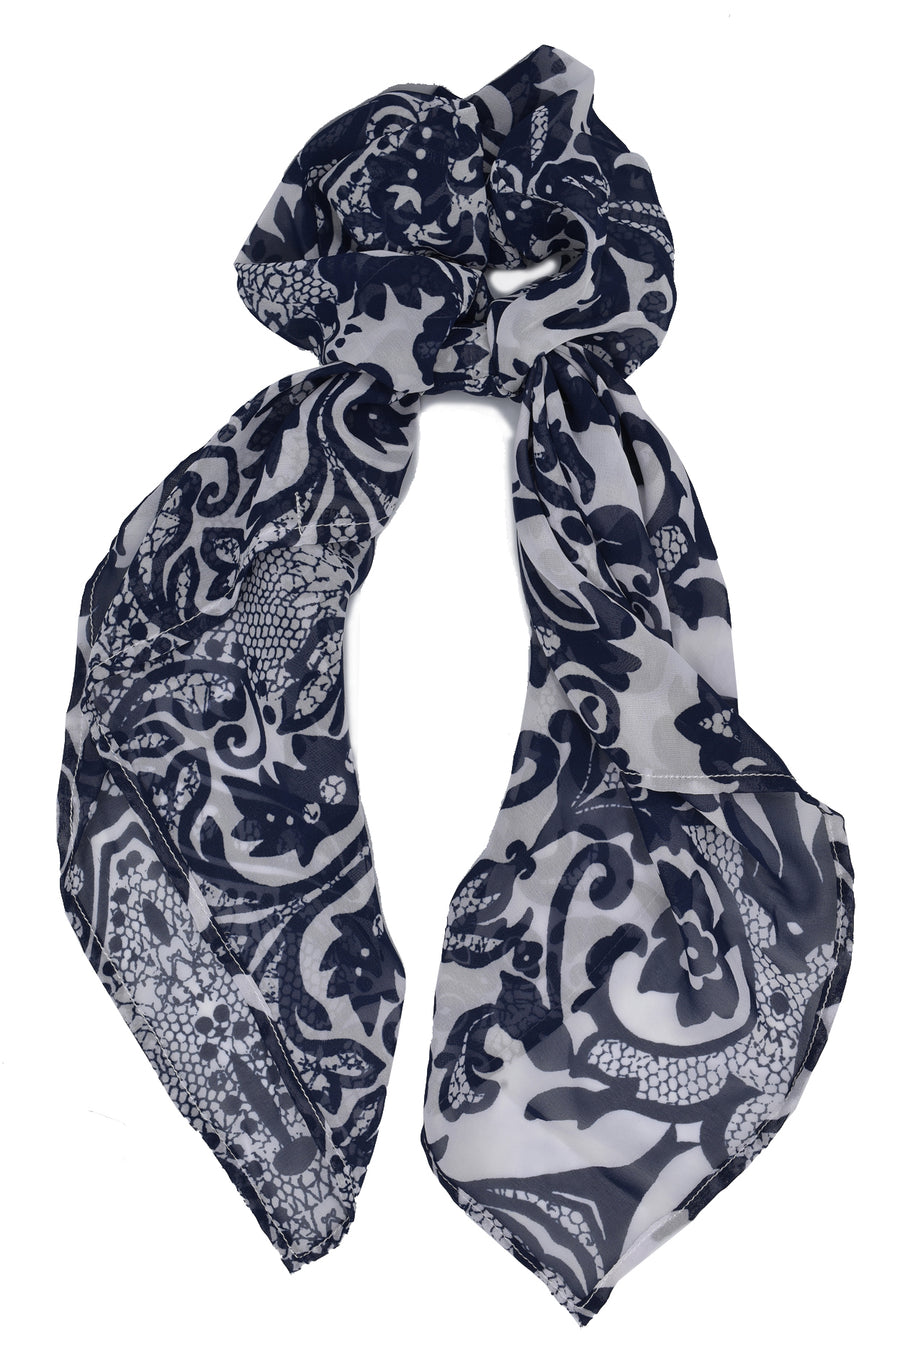 Snake print scrunchie scarf